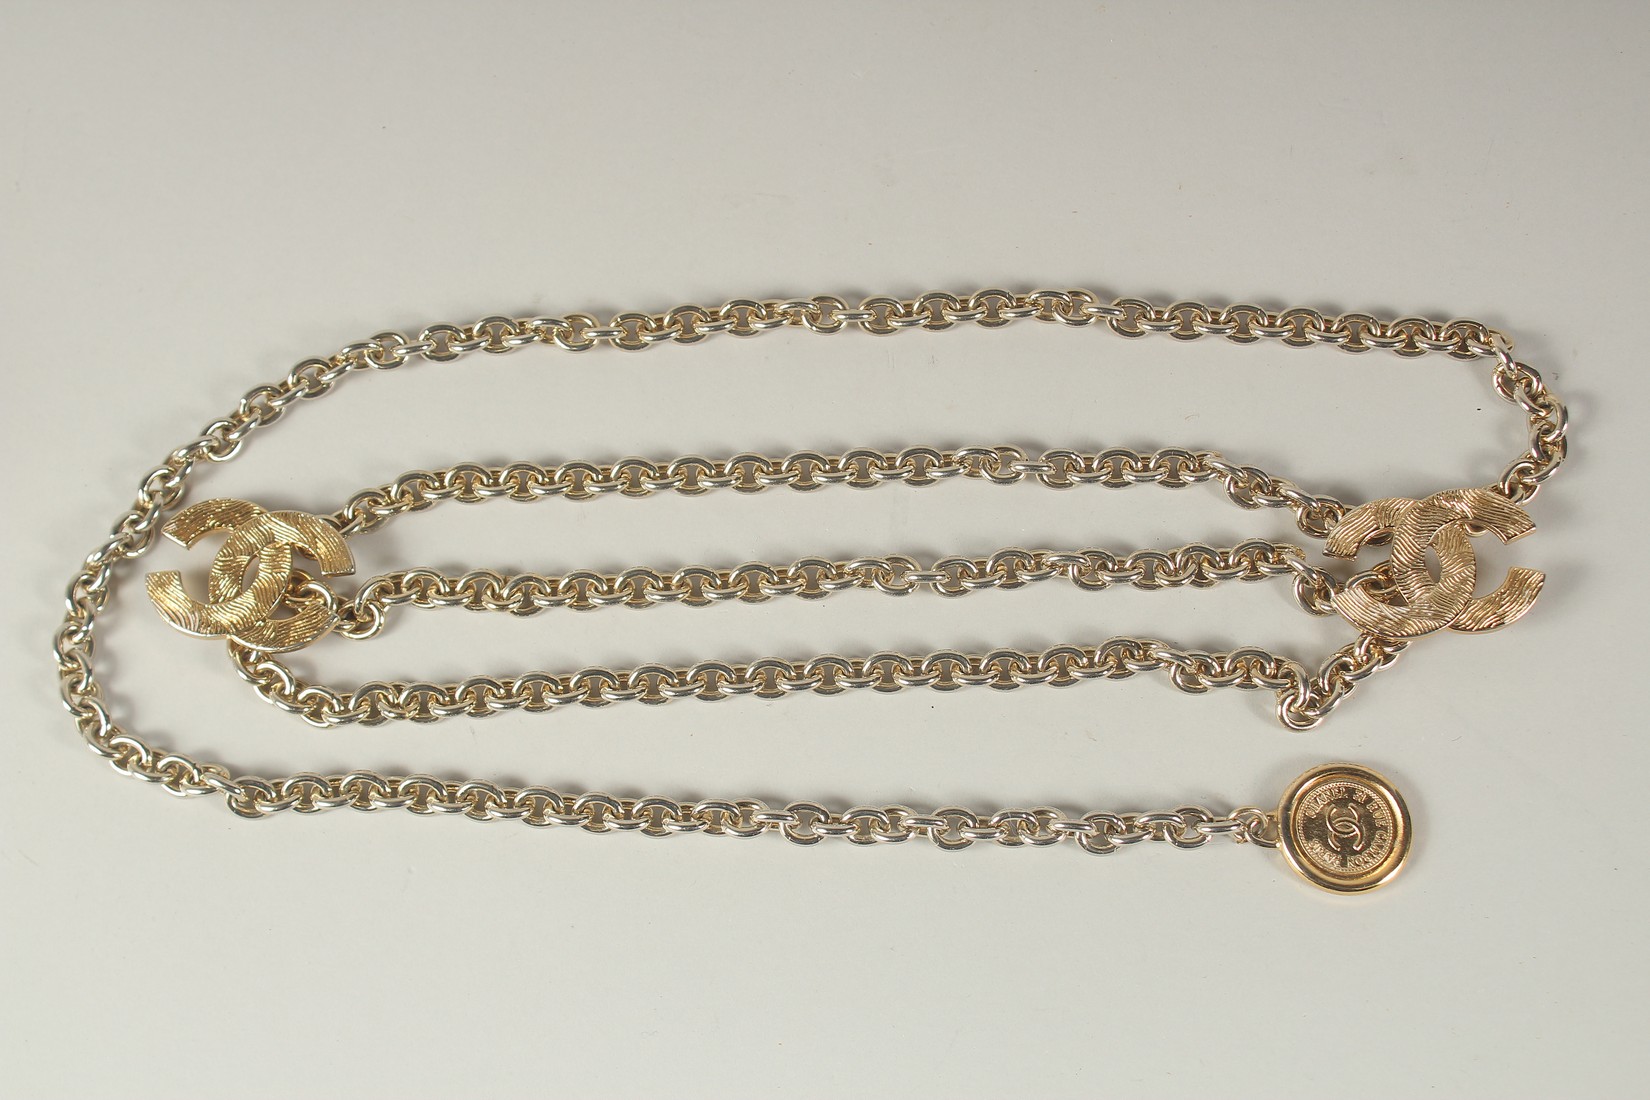 A LONG CHANEL GILT BELT with pendant and tie, double C emblem. 110cms long.